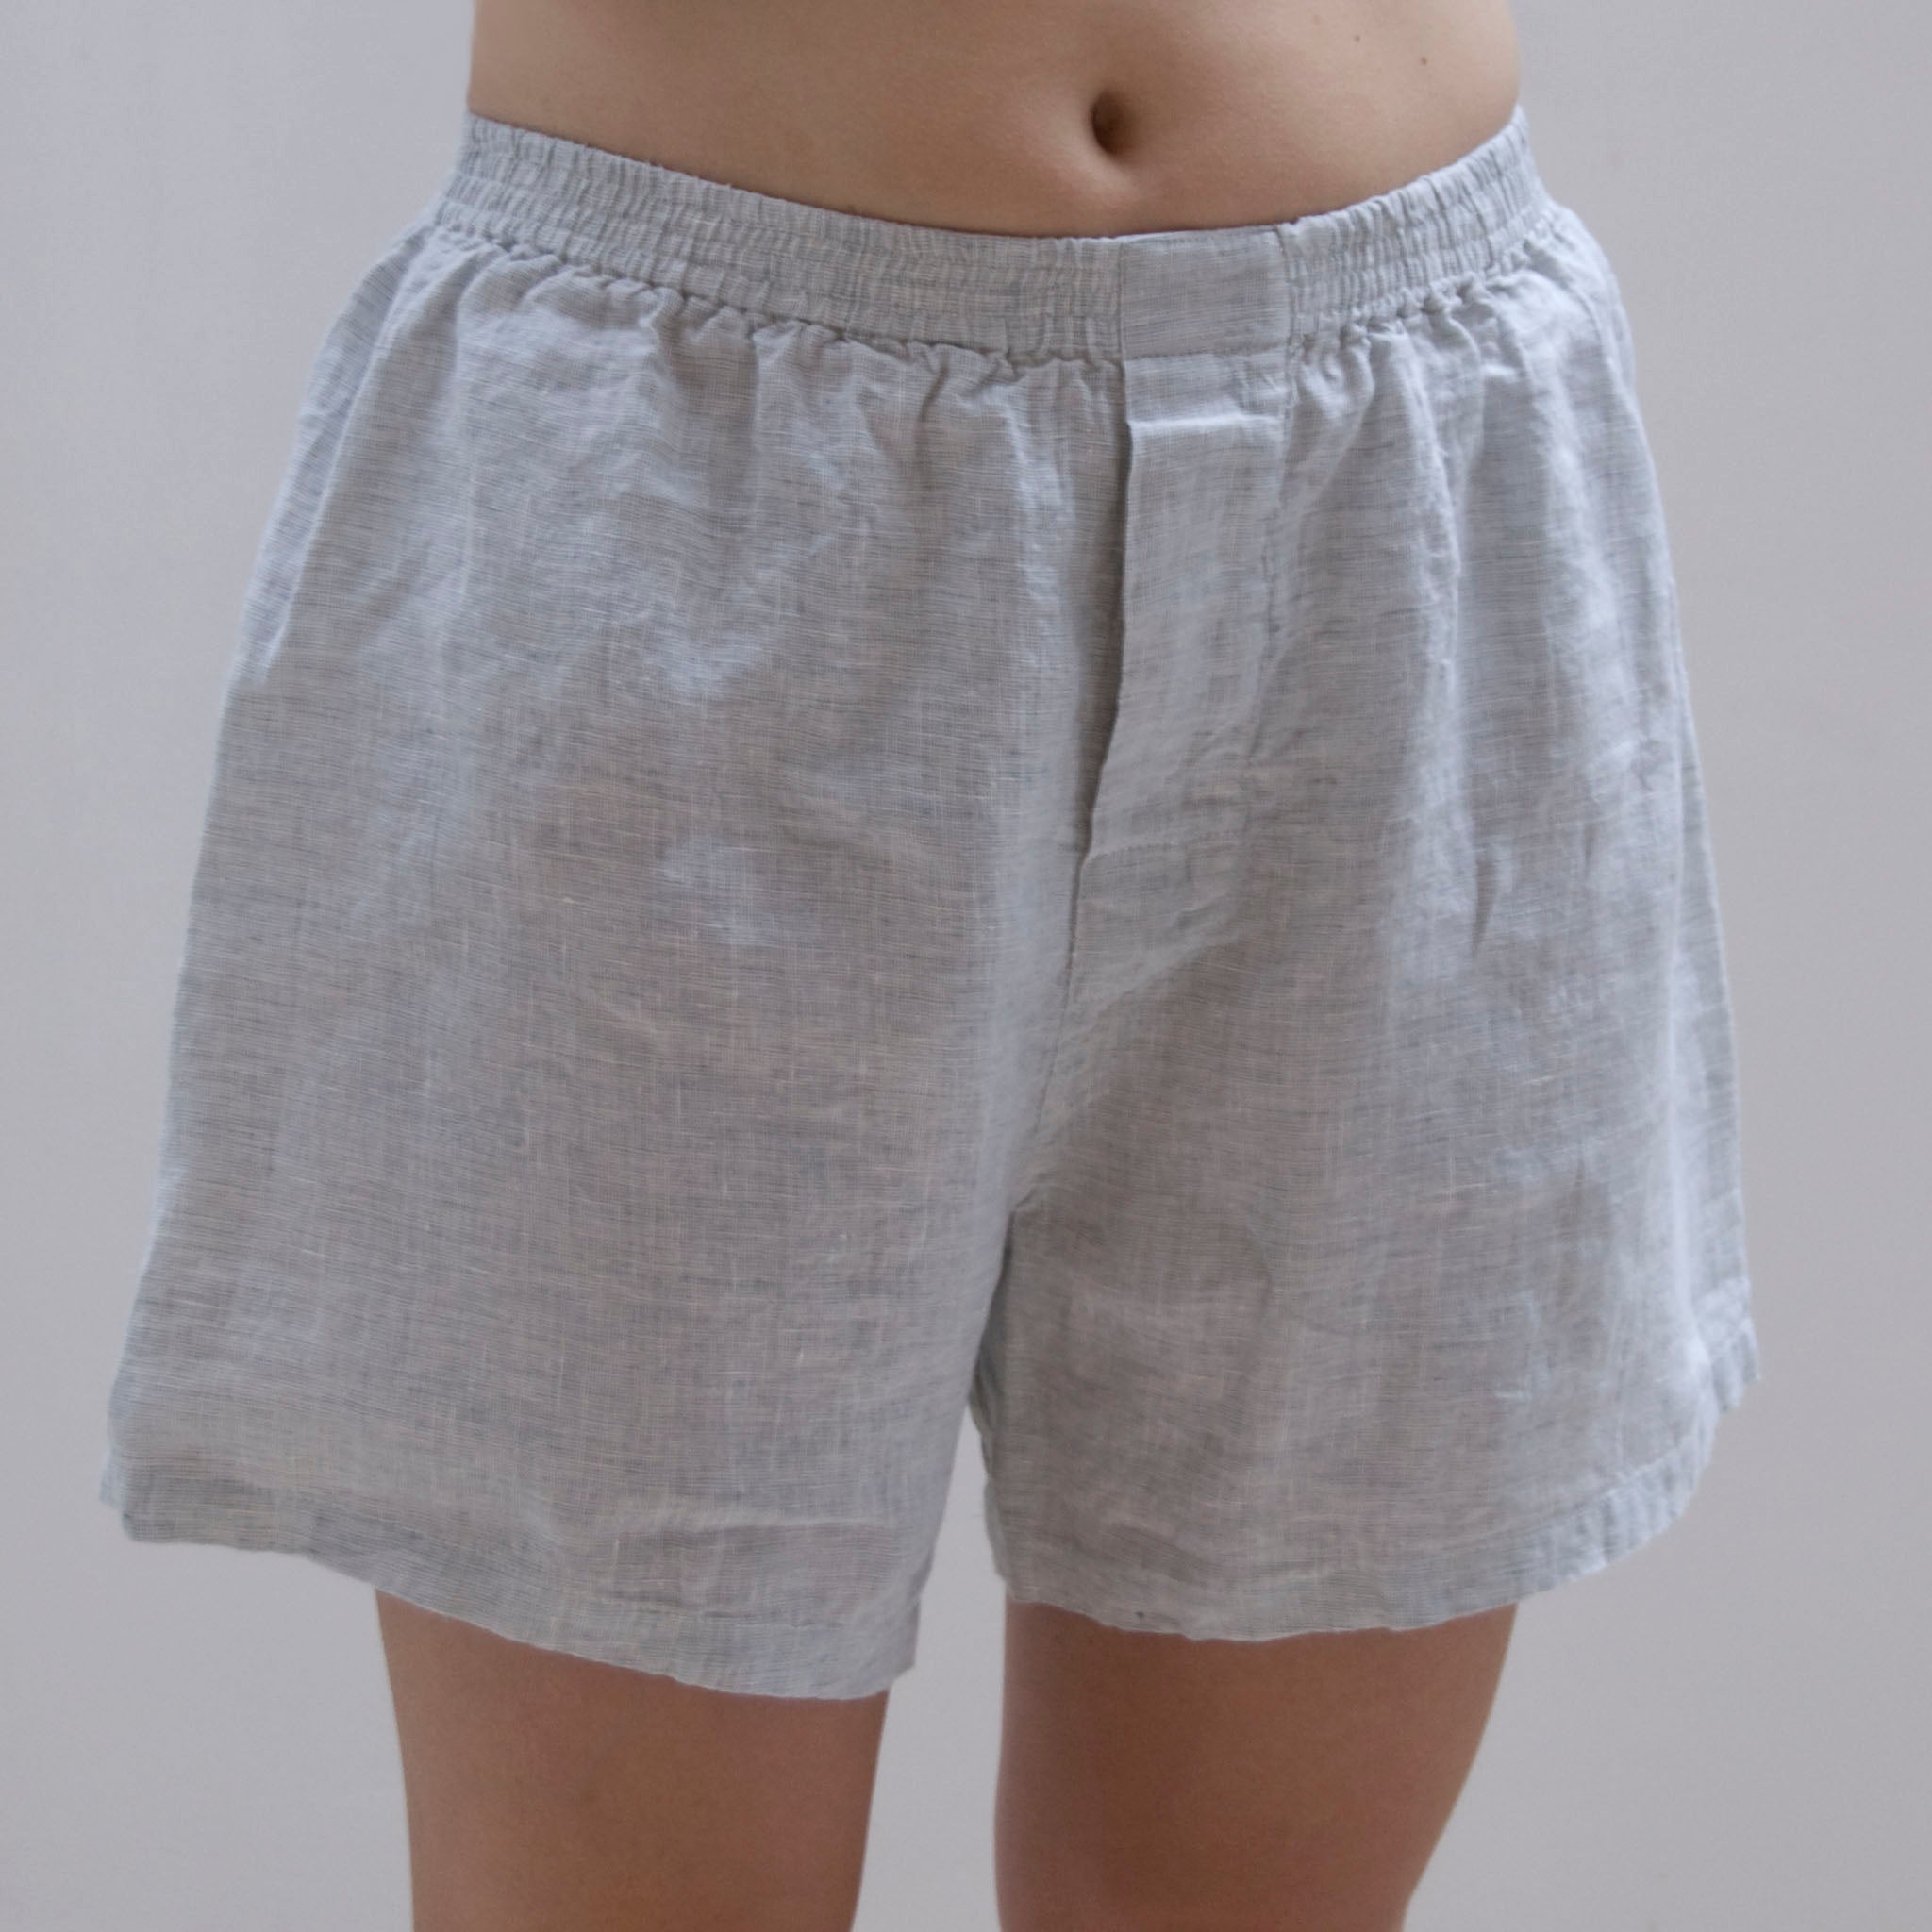 SAM boxer shorts - ALMA clothing by Anki Spets